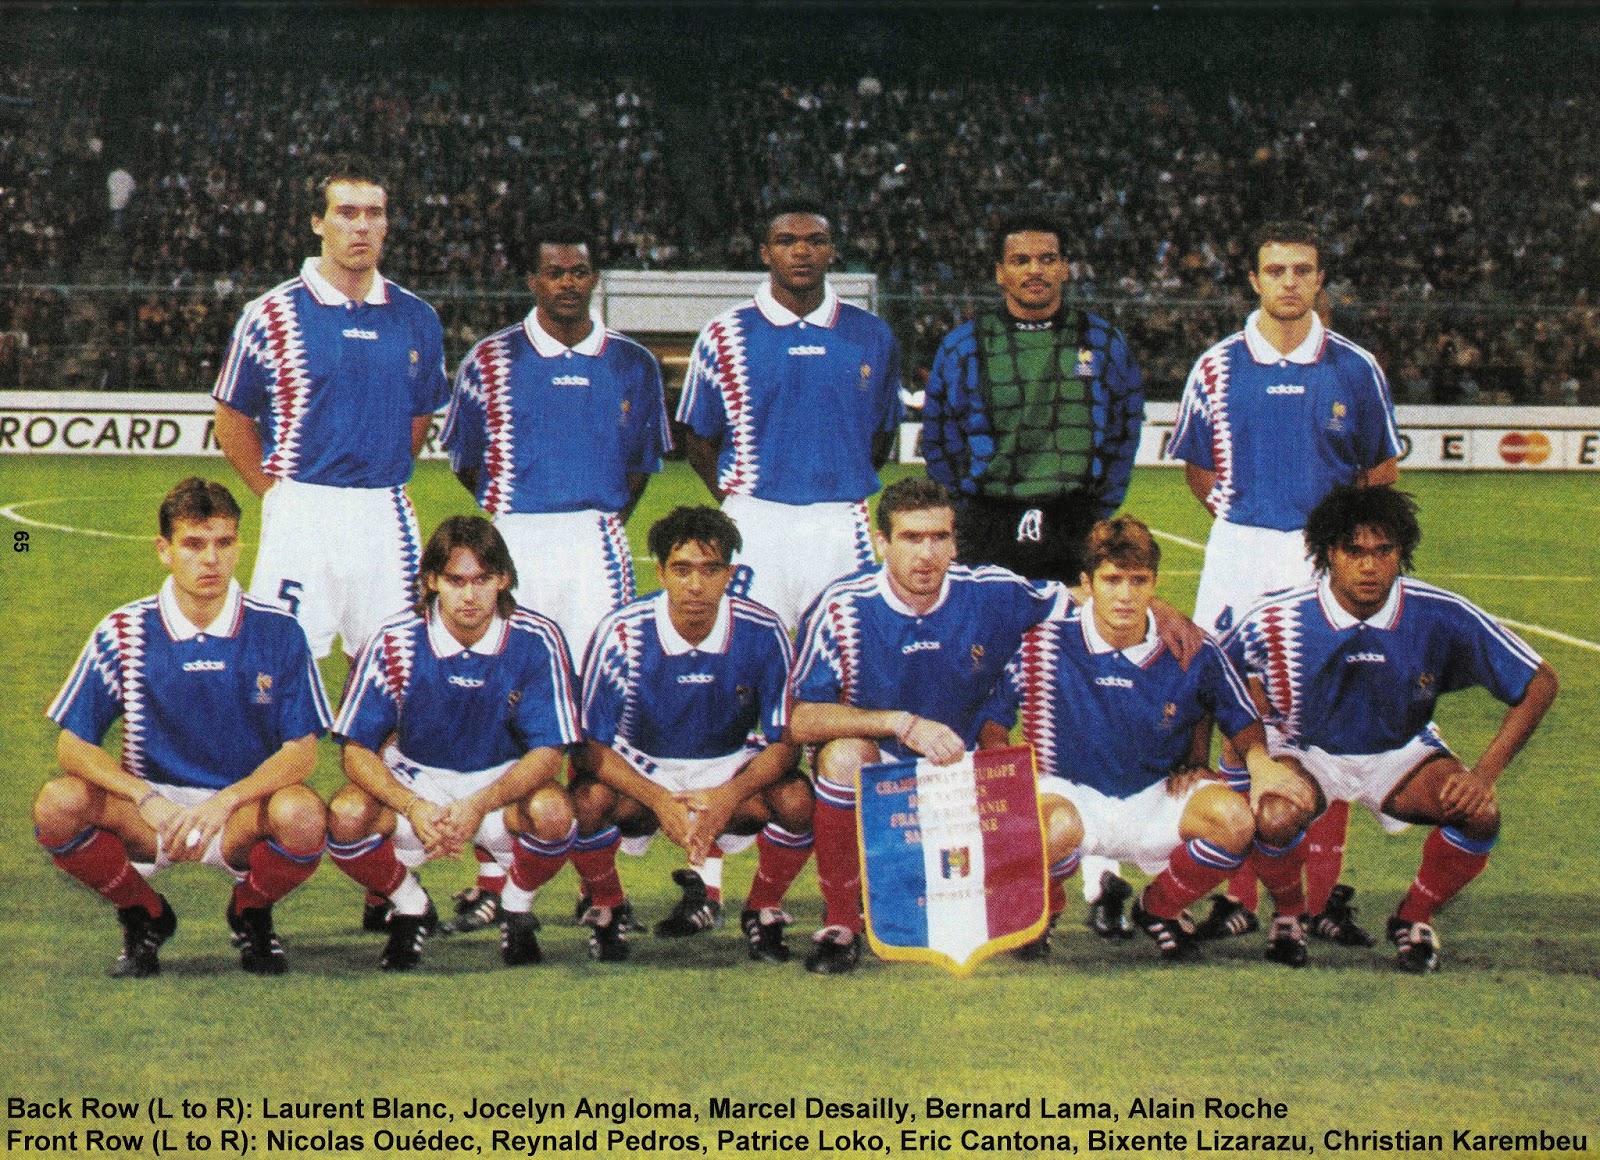 состав франции по футболу 1998 состав